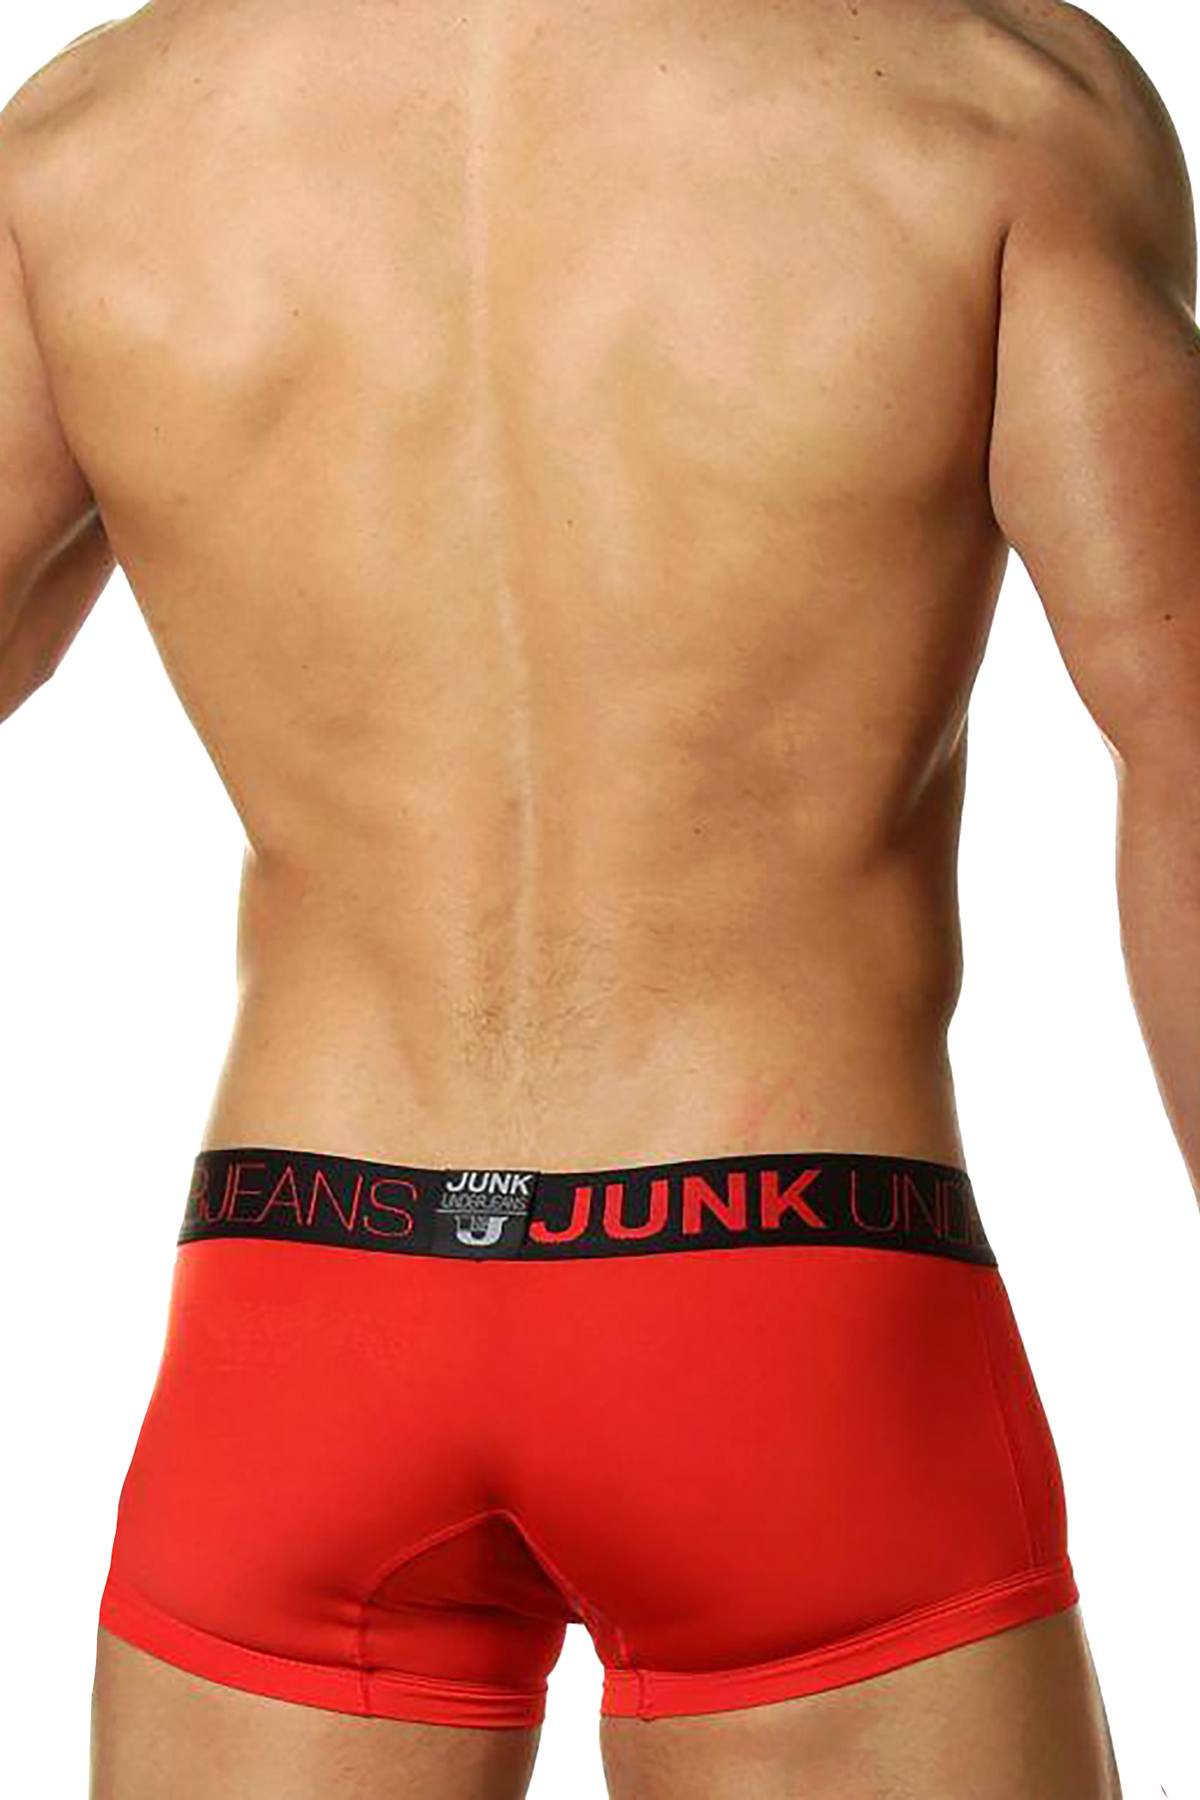 Junk Underjeans Hot Red Aura Trunk